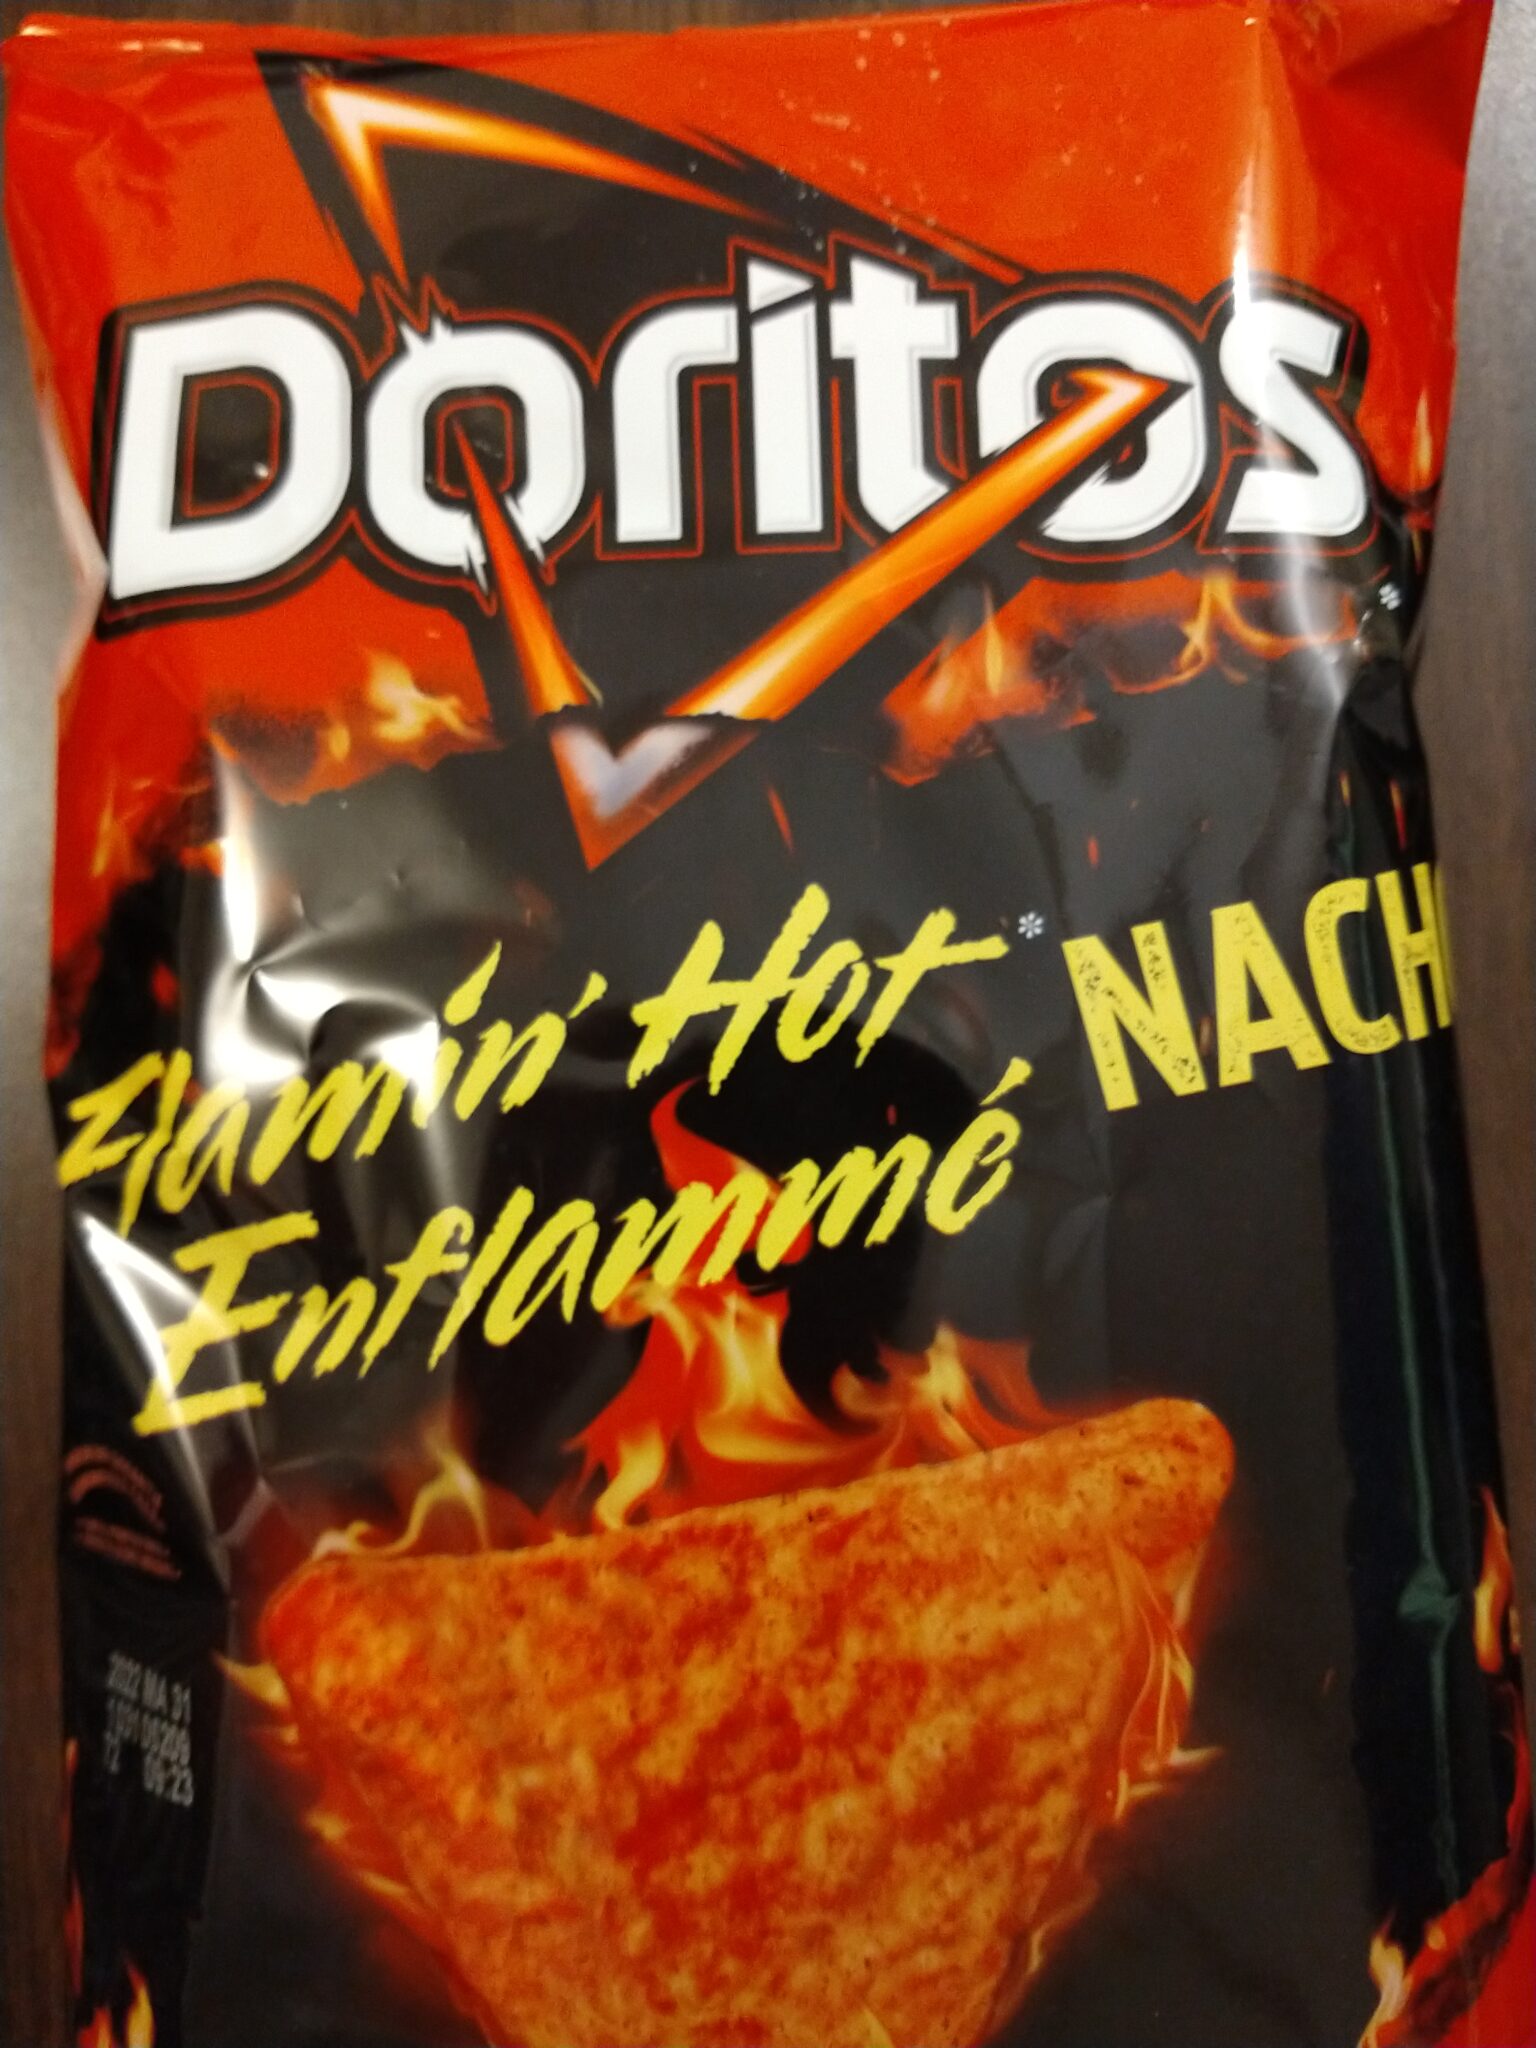 Doritos – Flamin’ Hot Nacho